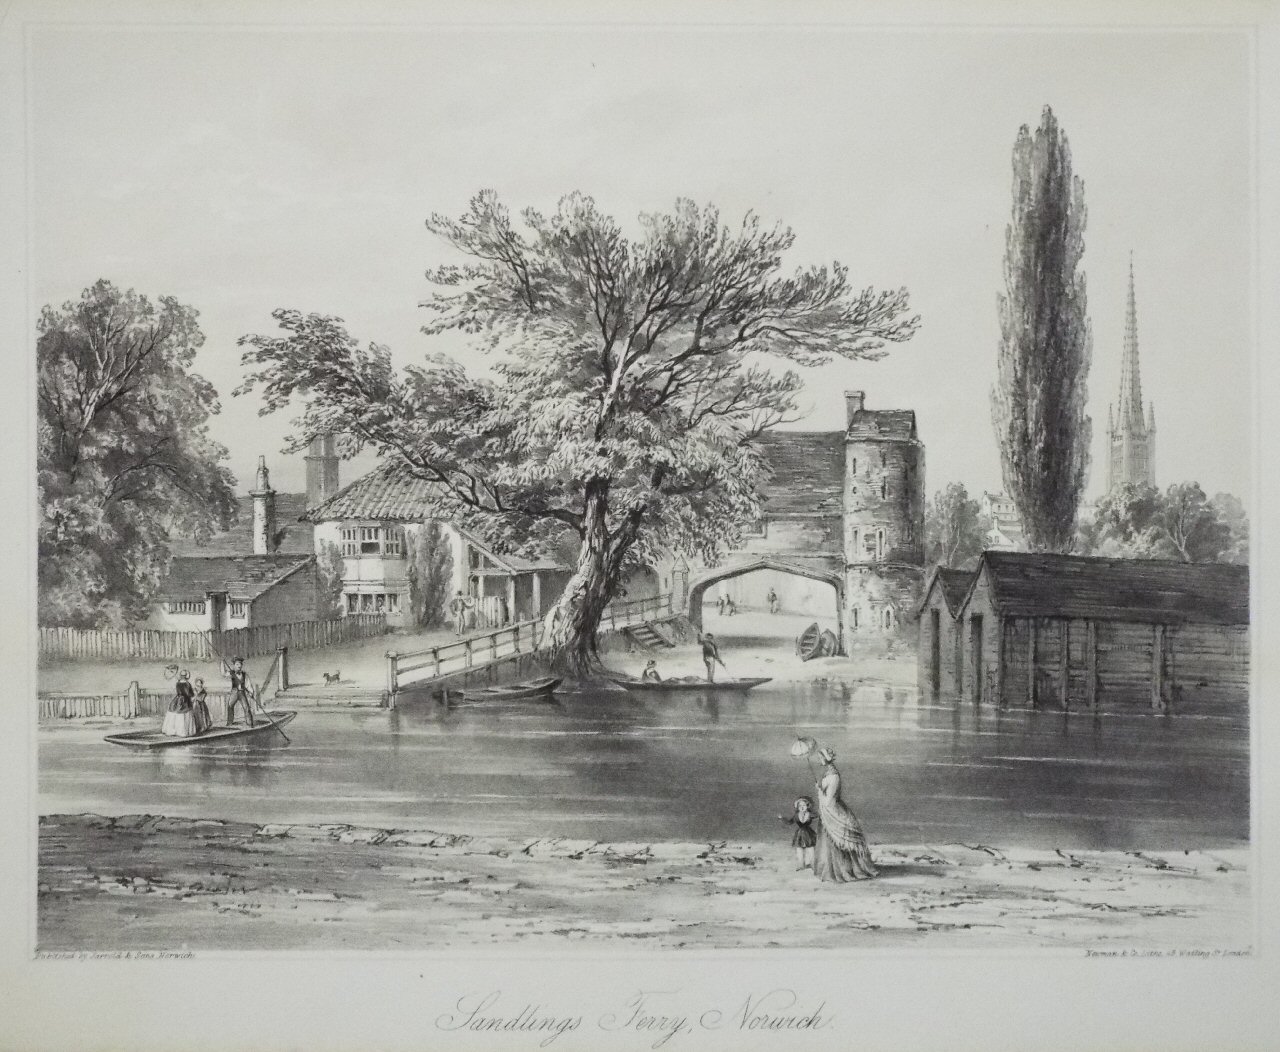 Lithograph - Sandlings Ferry, Norwich. - Newman